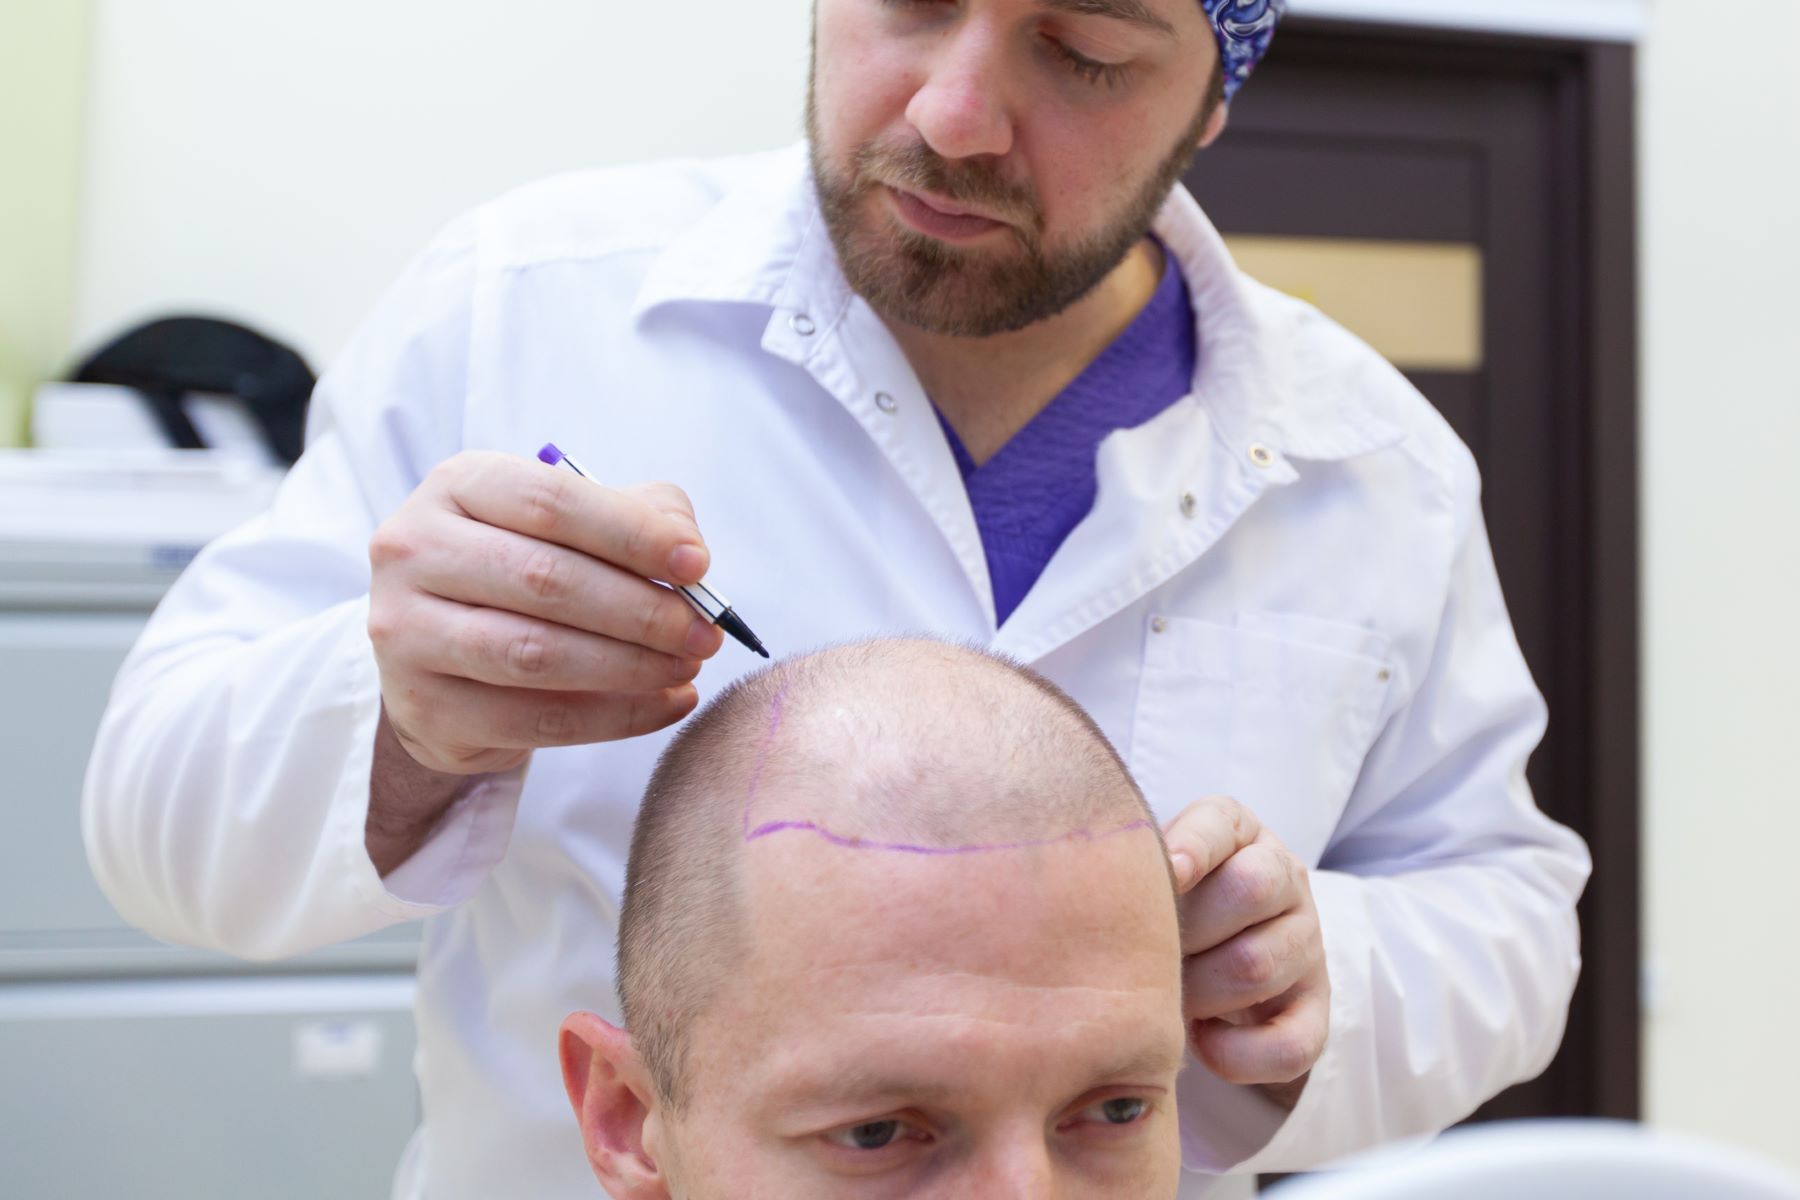 Hair transplant as a treatment for hair loss